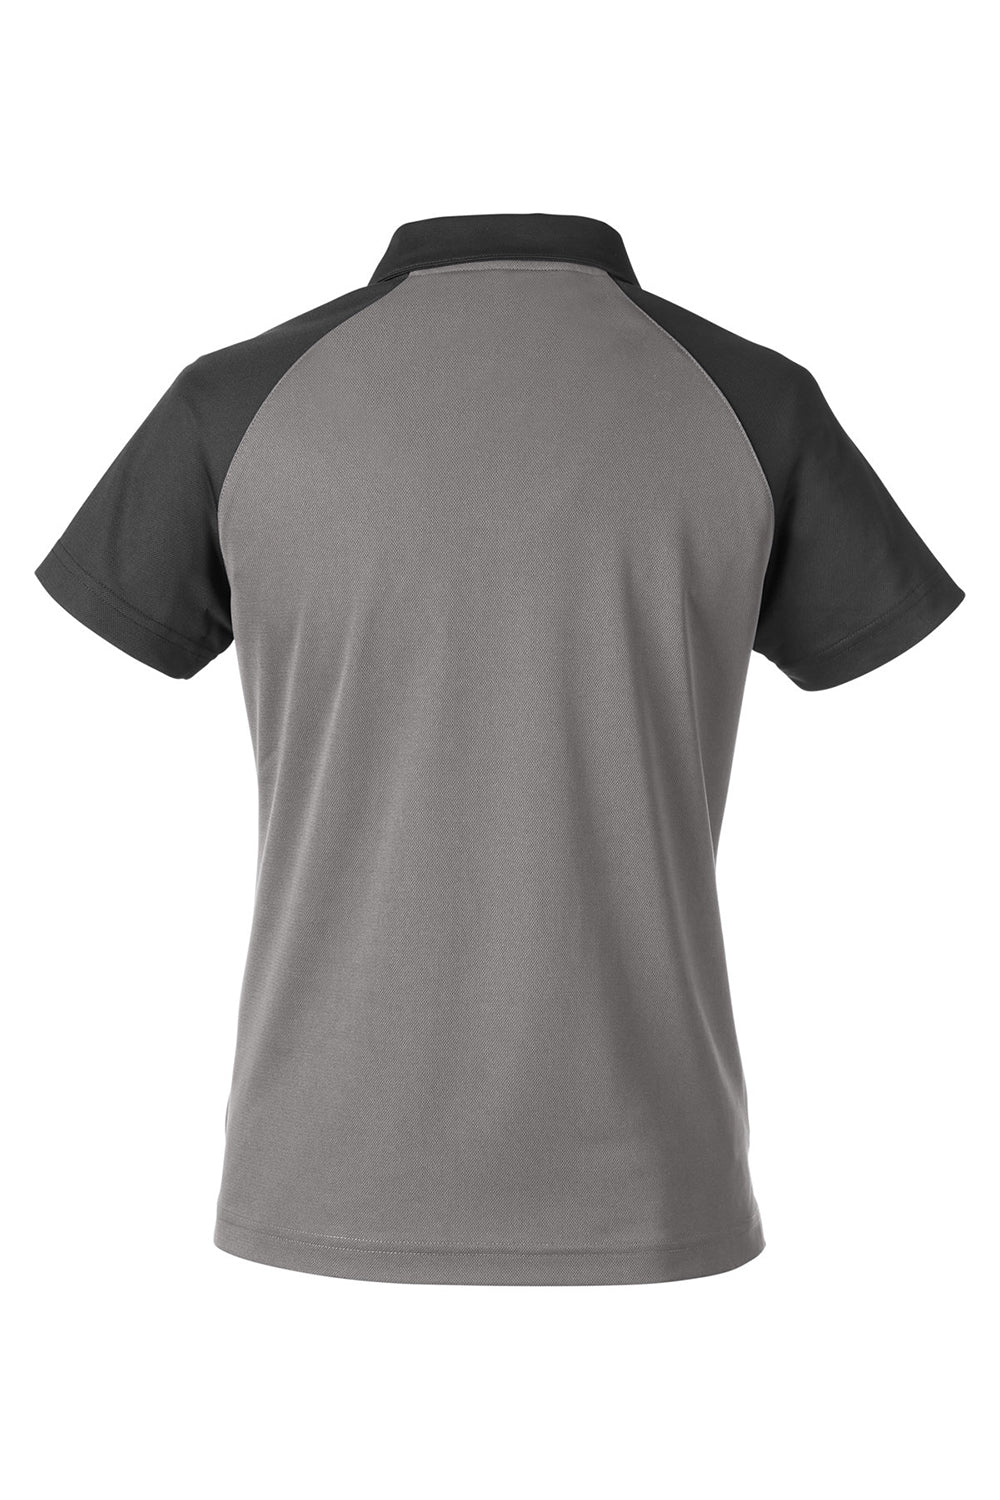 Team 365 TT21CW Womens Command Colorblock Moisture Wicking Short Sleeve Polo Shirt Graphite Grey/Black Flat Back